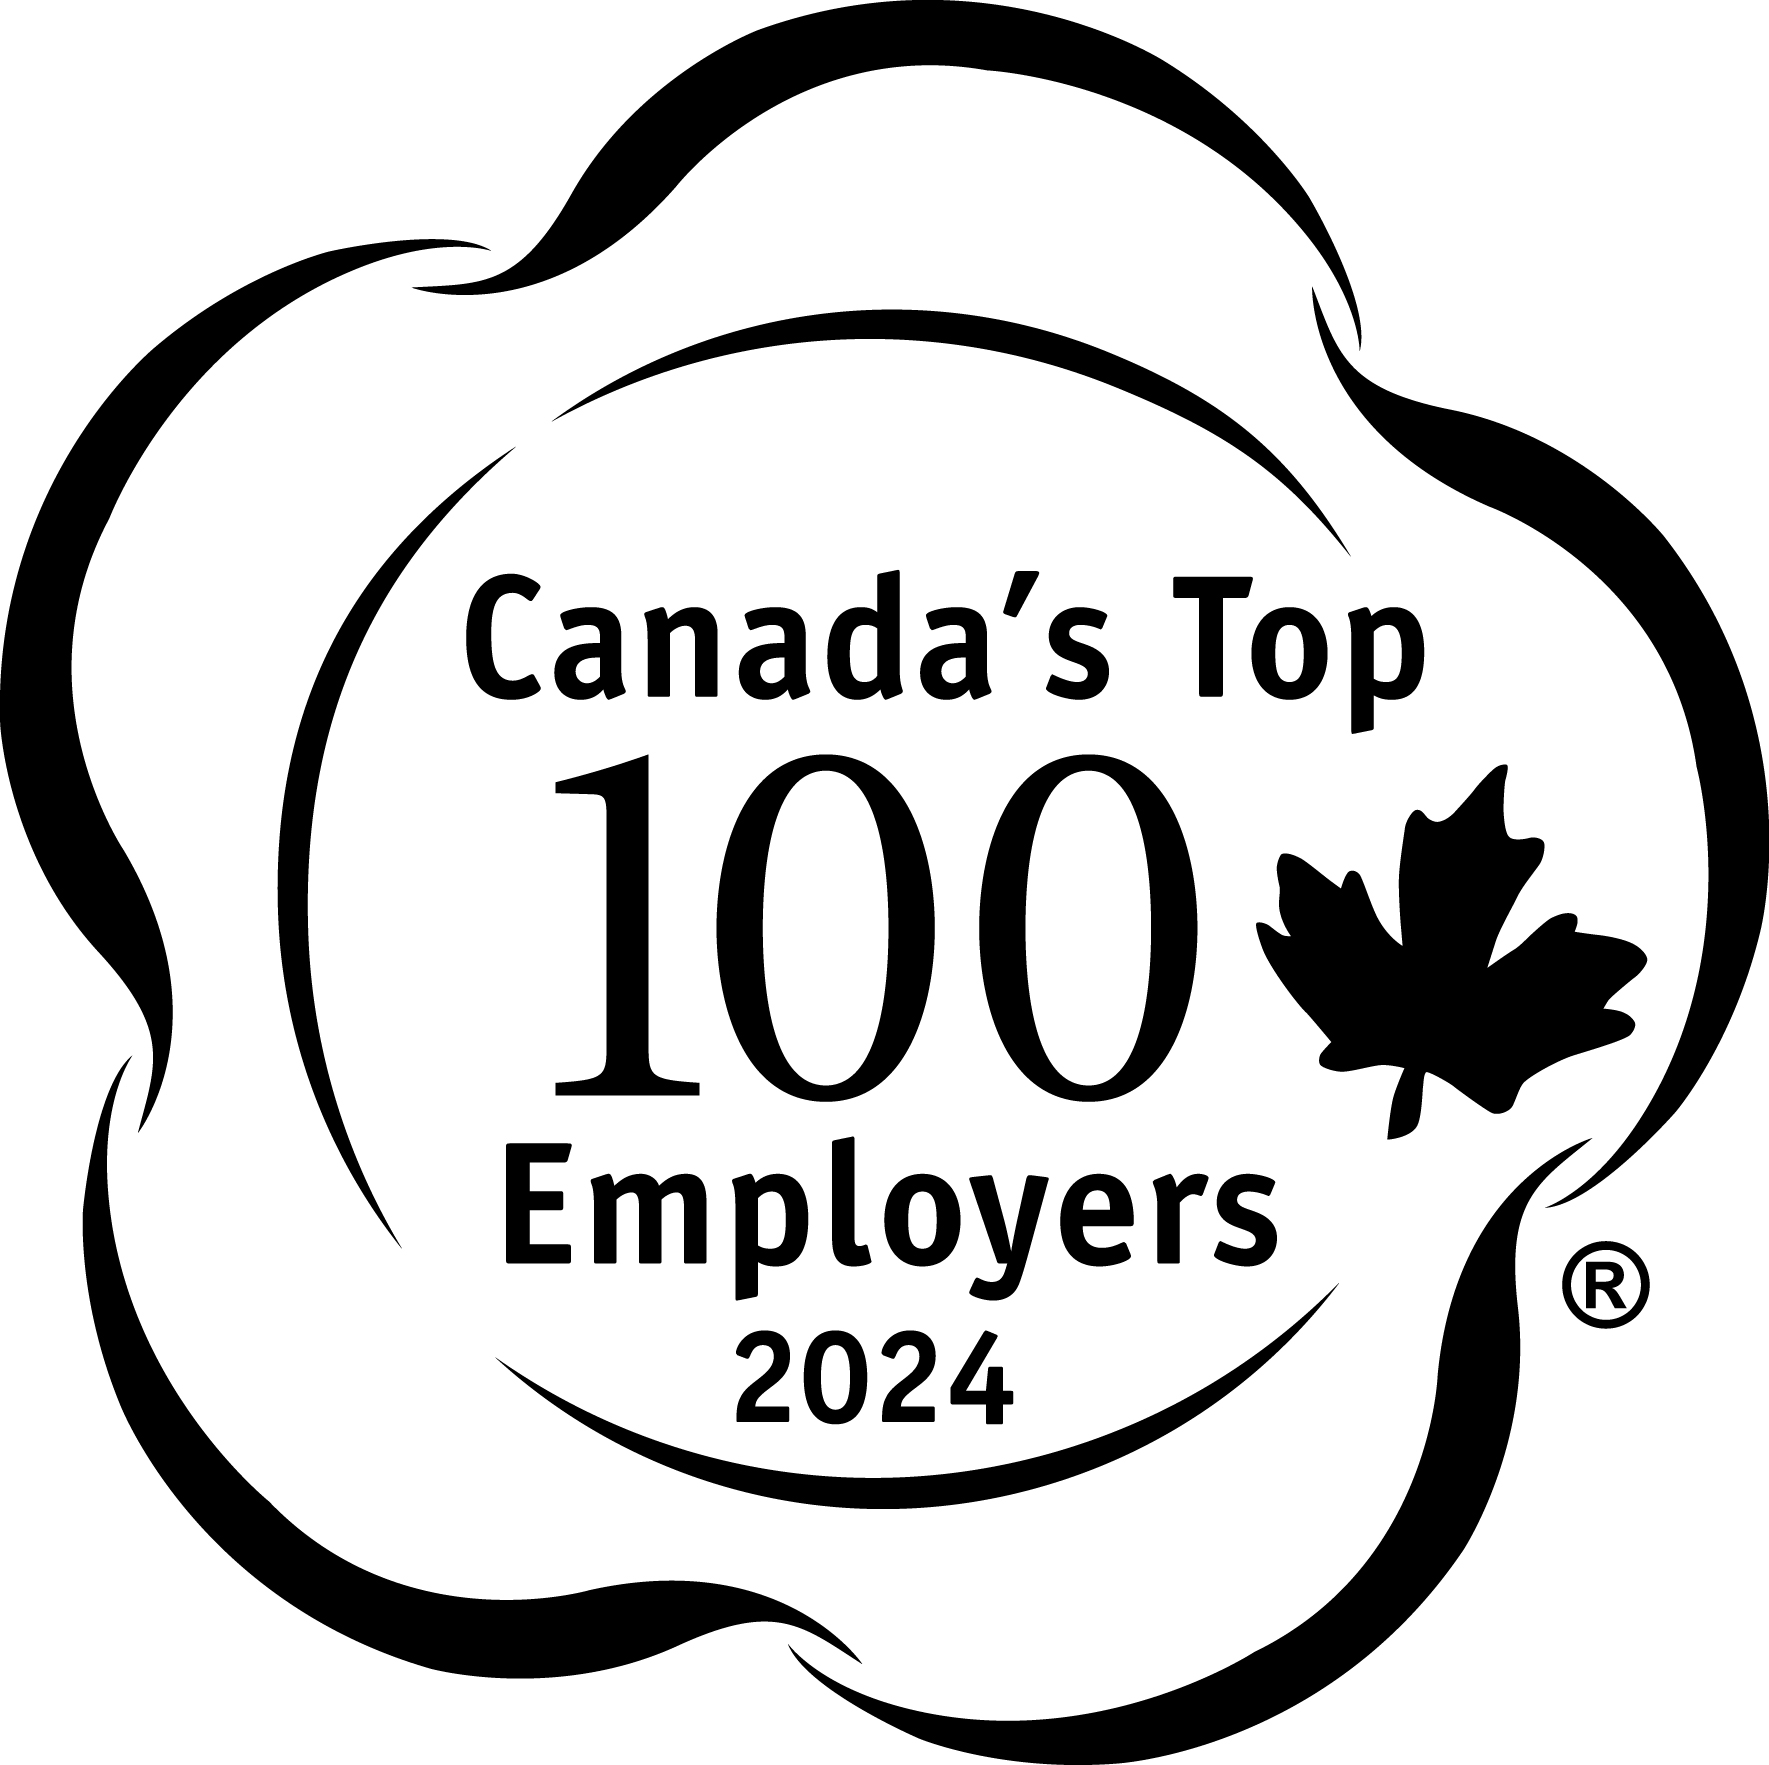 Canada's Top 100 Employers 2021. Logo.